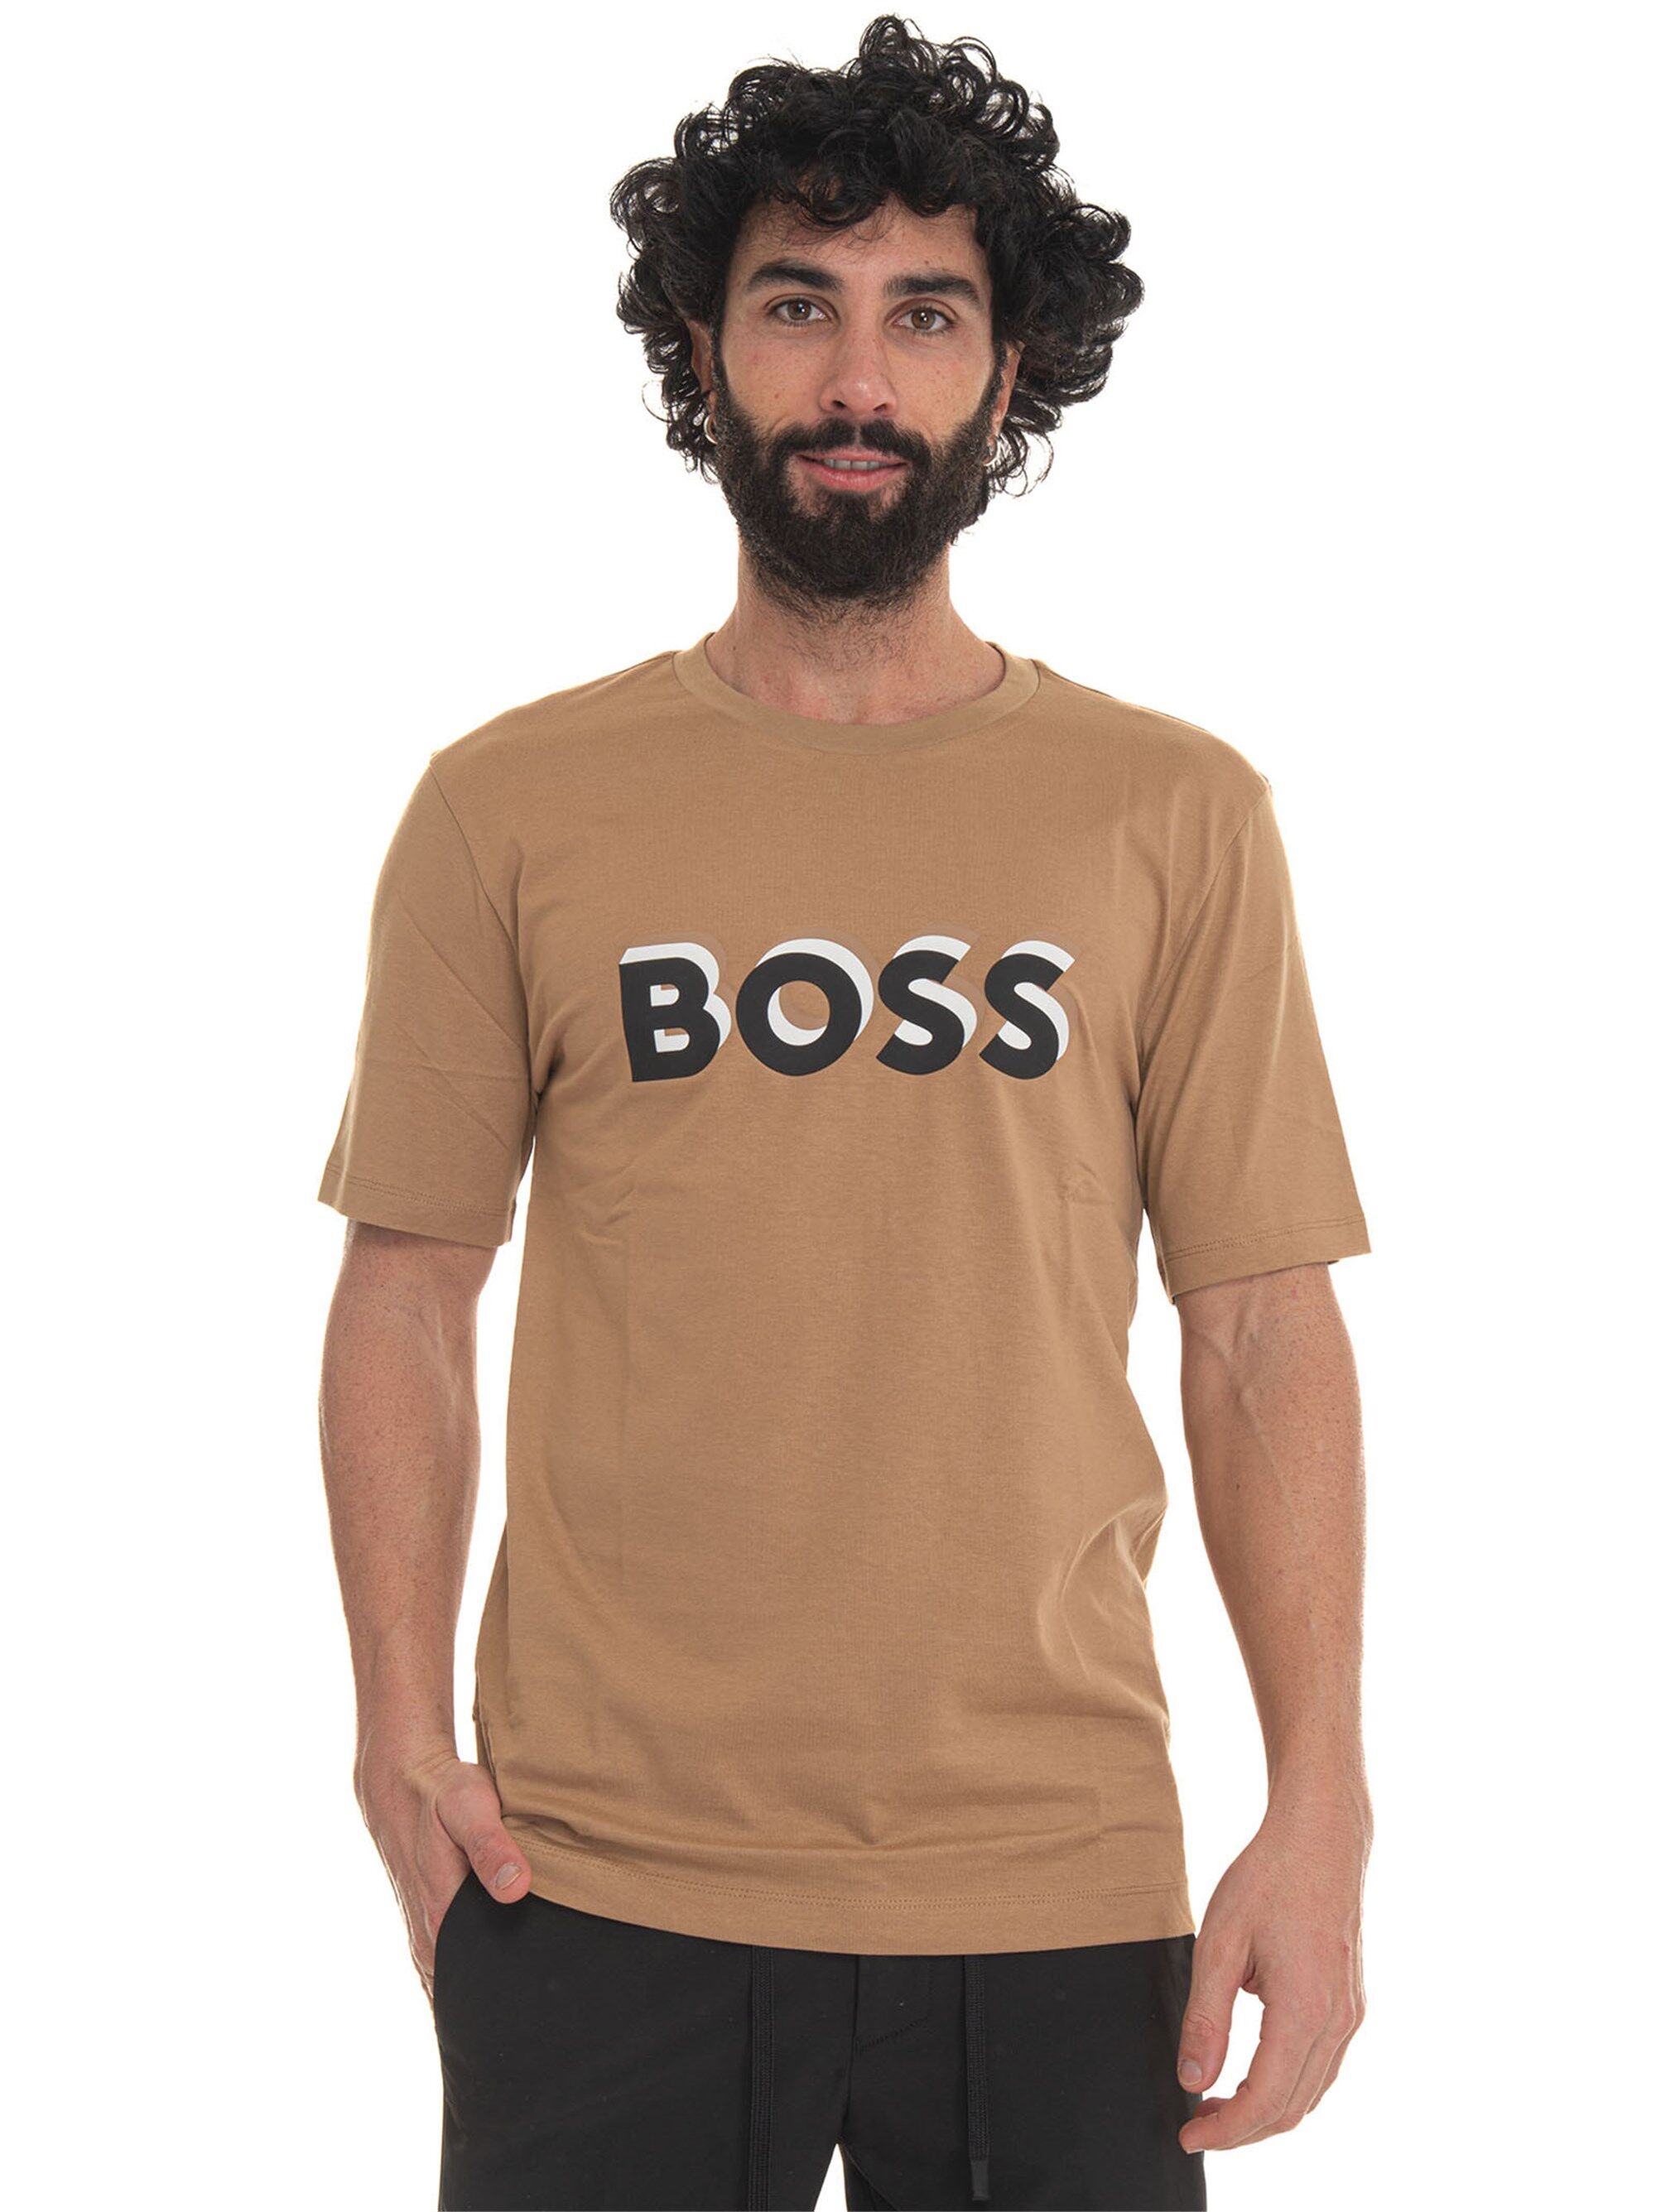 Boss T-shirt girocollo mezza manica Beige Uomo L